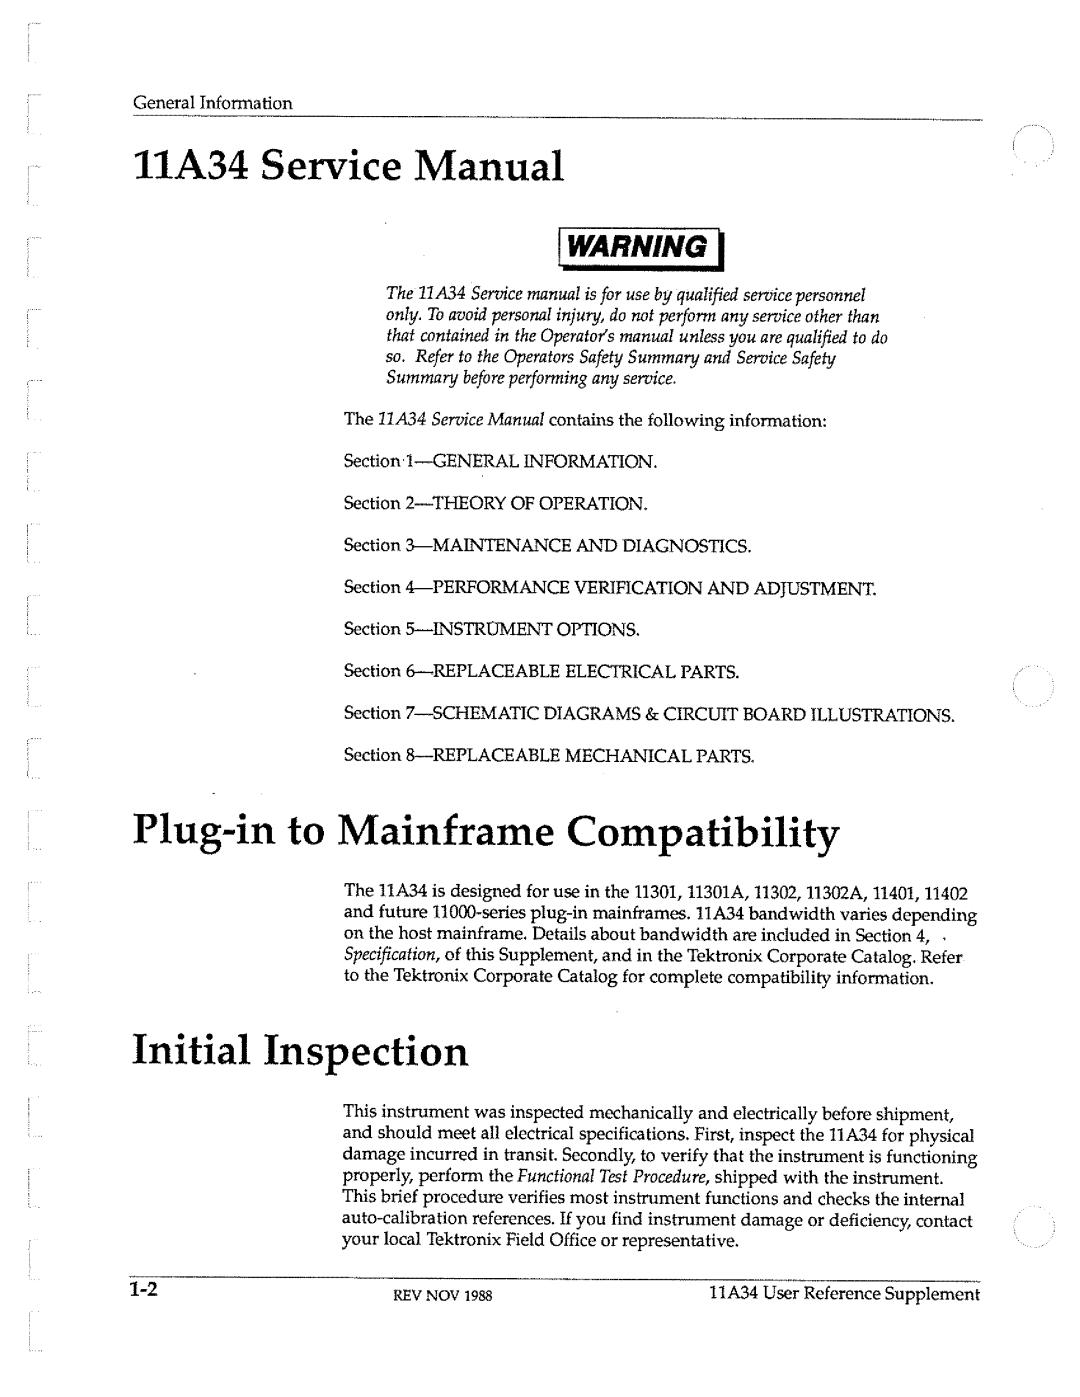 Tektronix 11A34 manual 